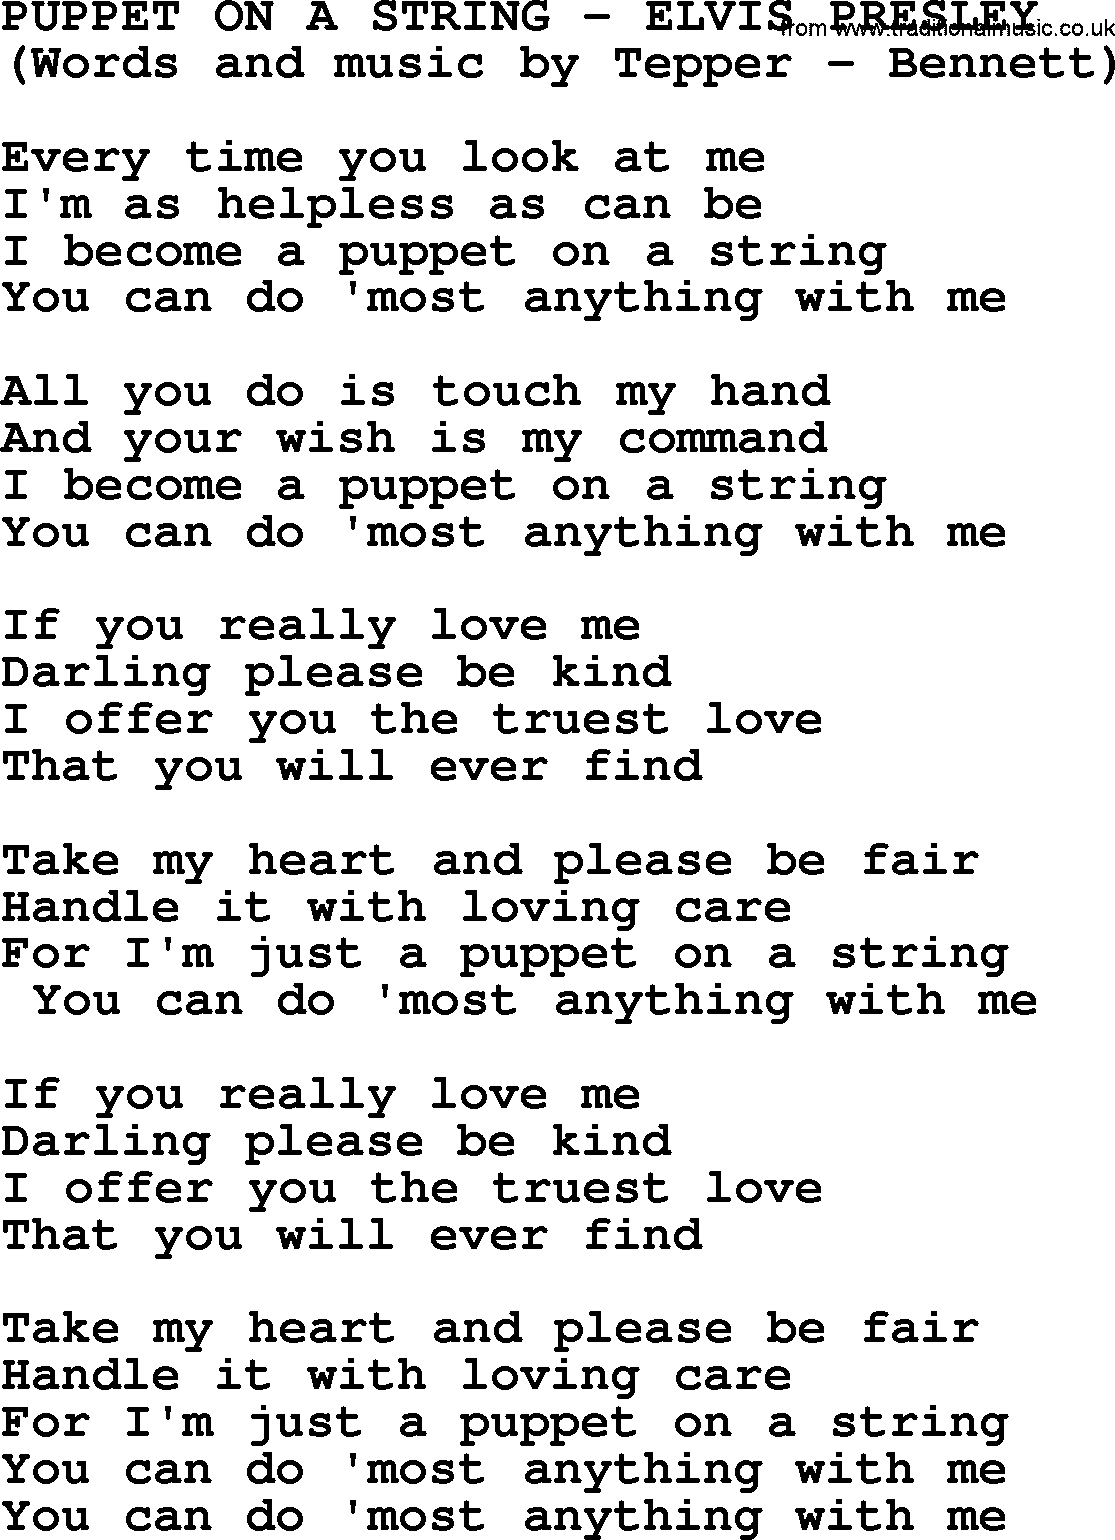 Elvis Presley song: Puppet On A String lyrics